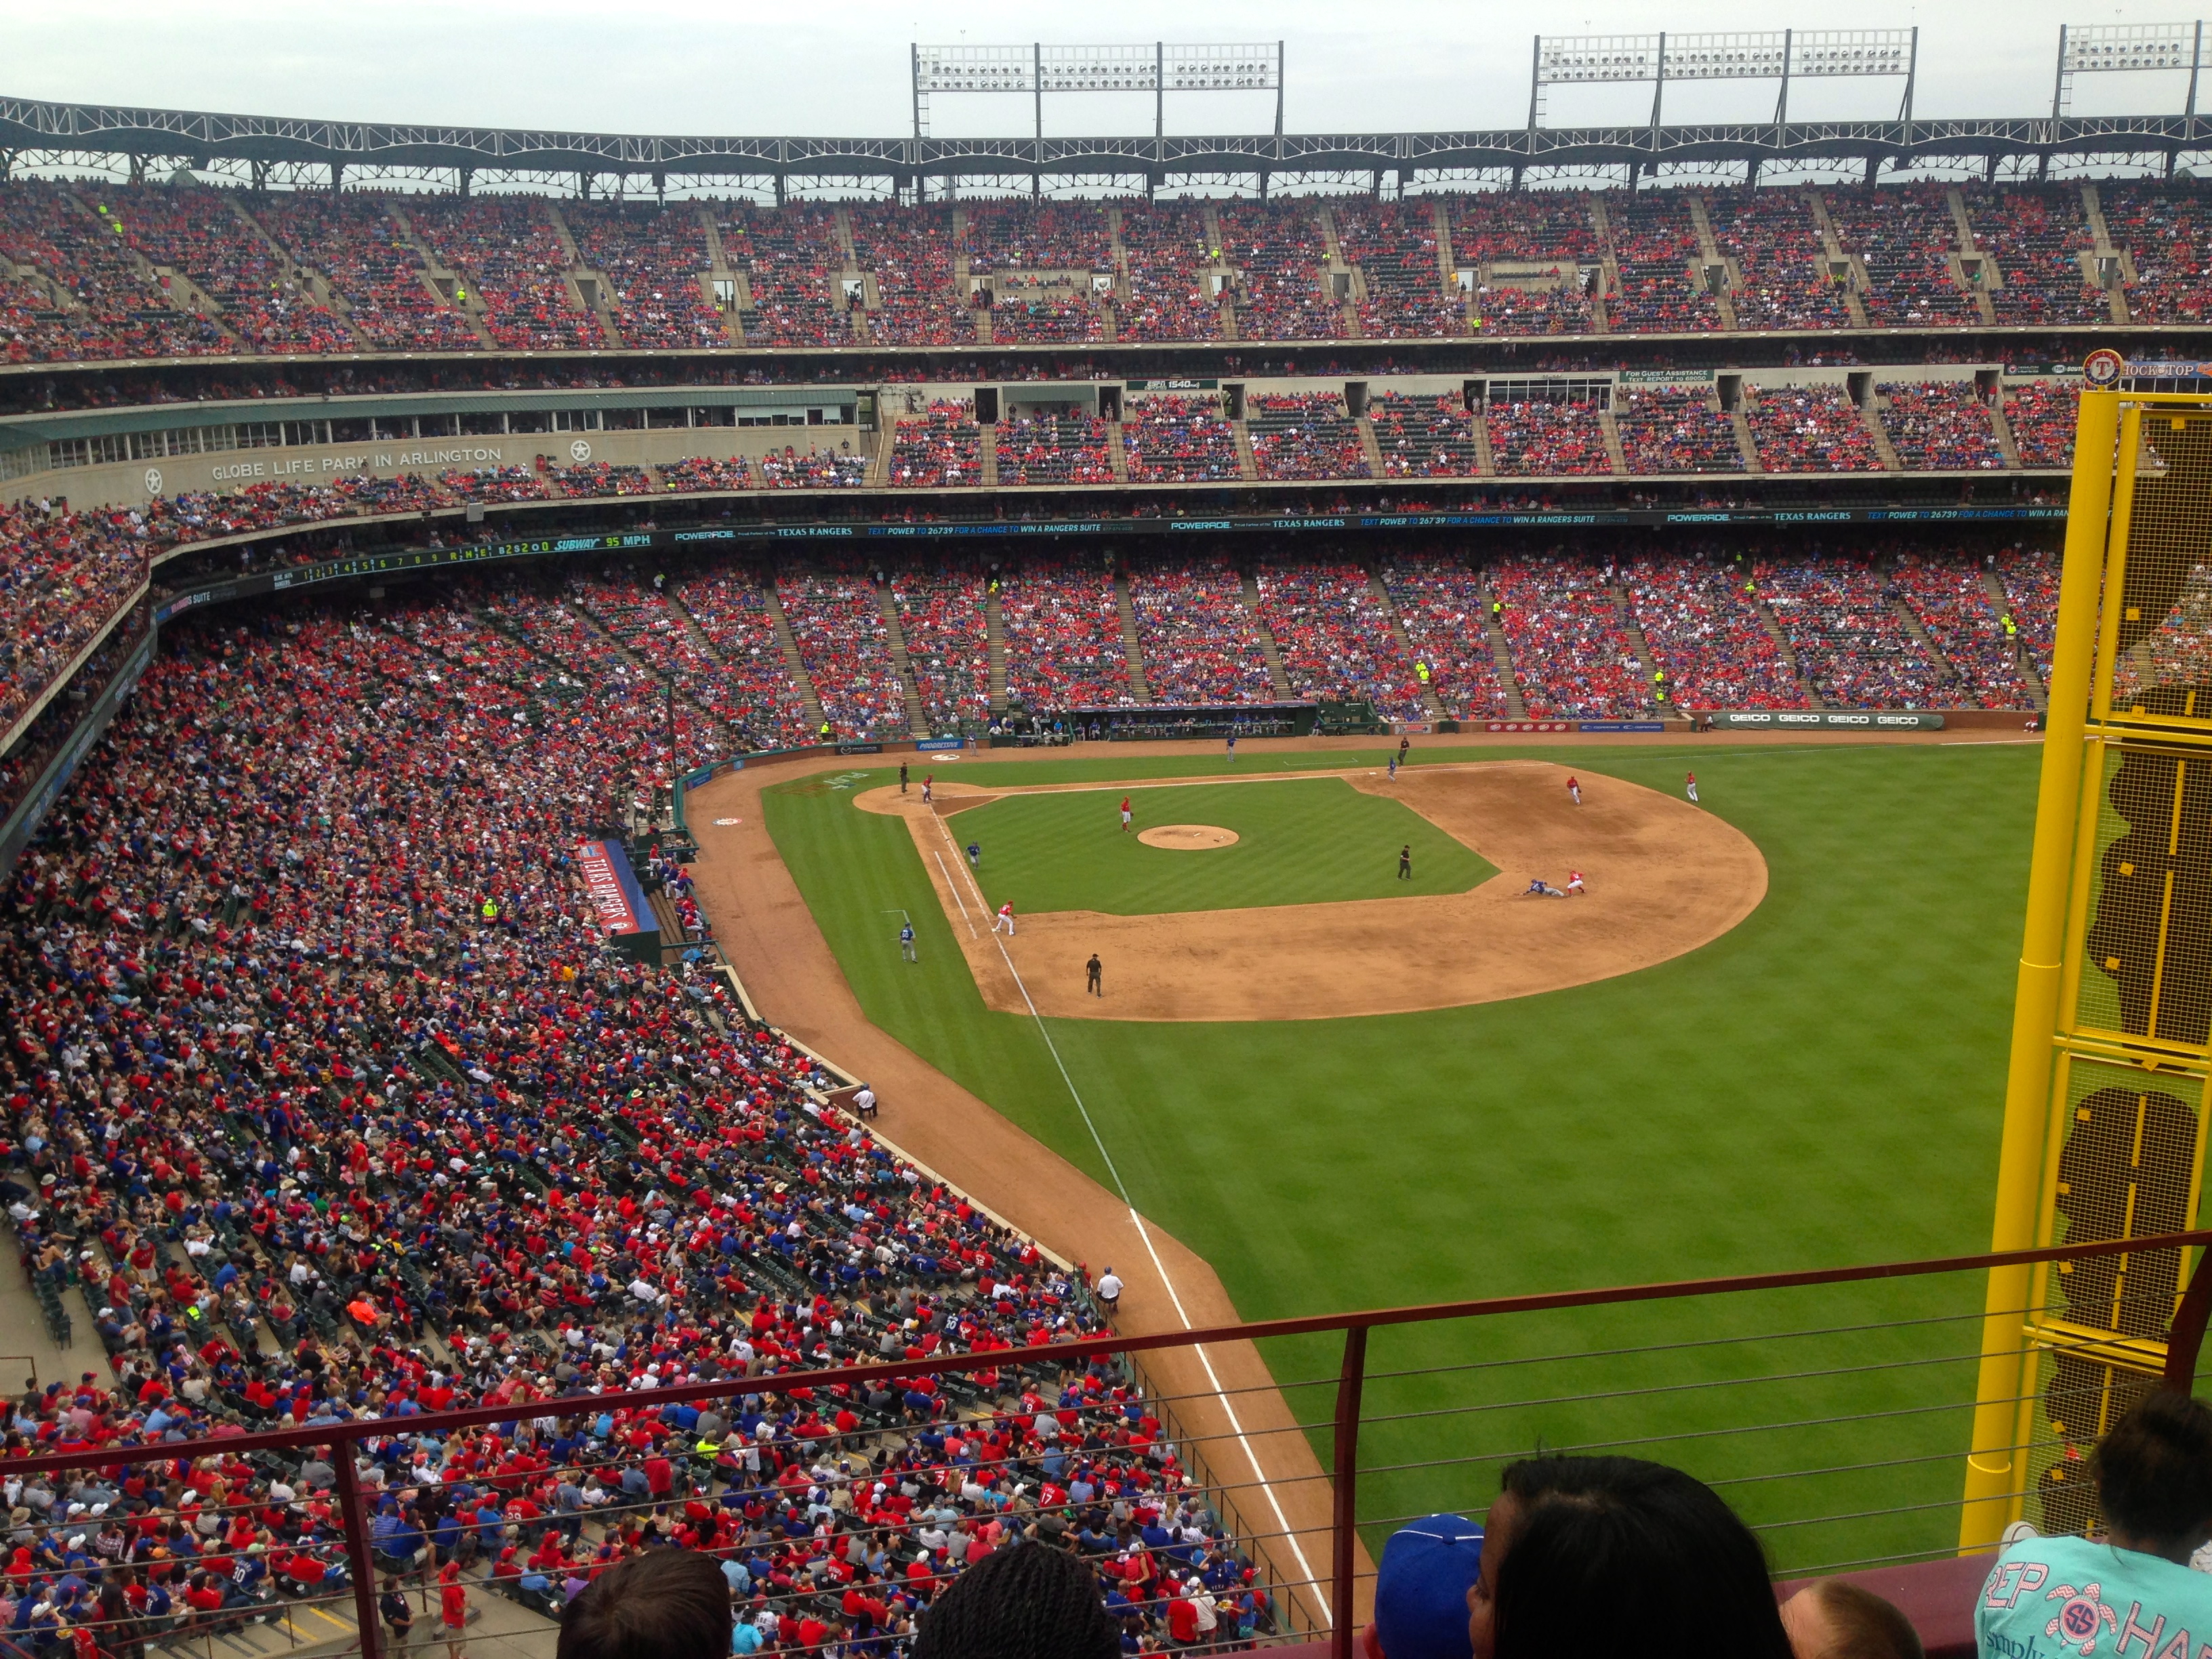 Baseball Arlington Texas United States of America USA